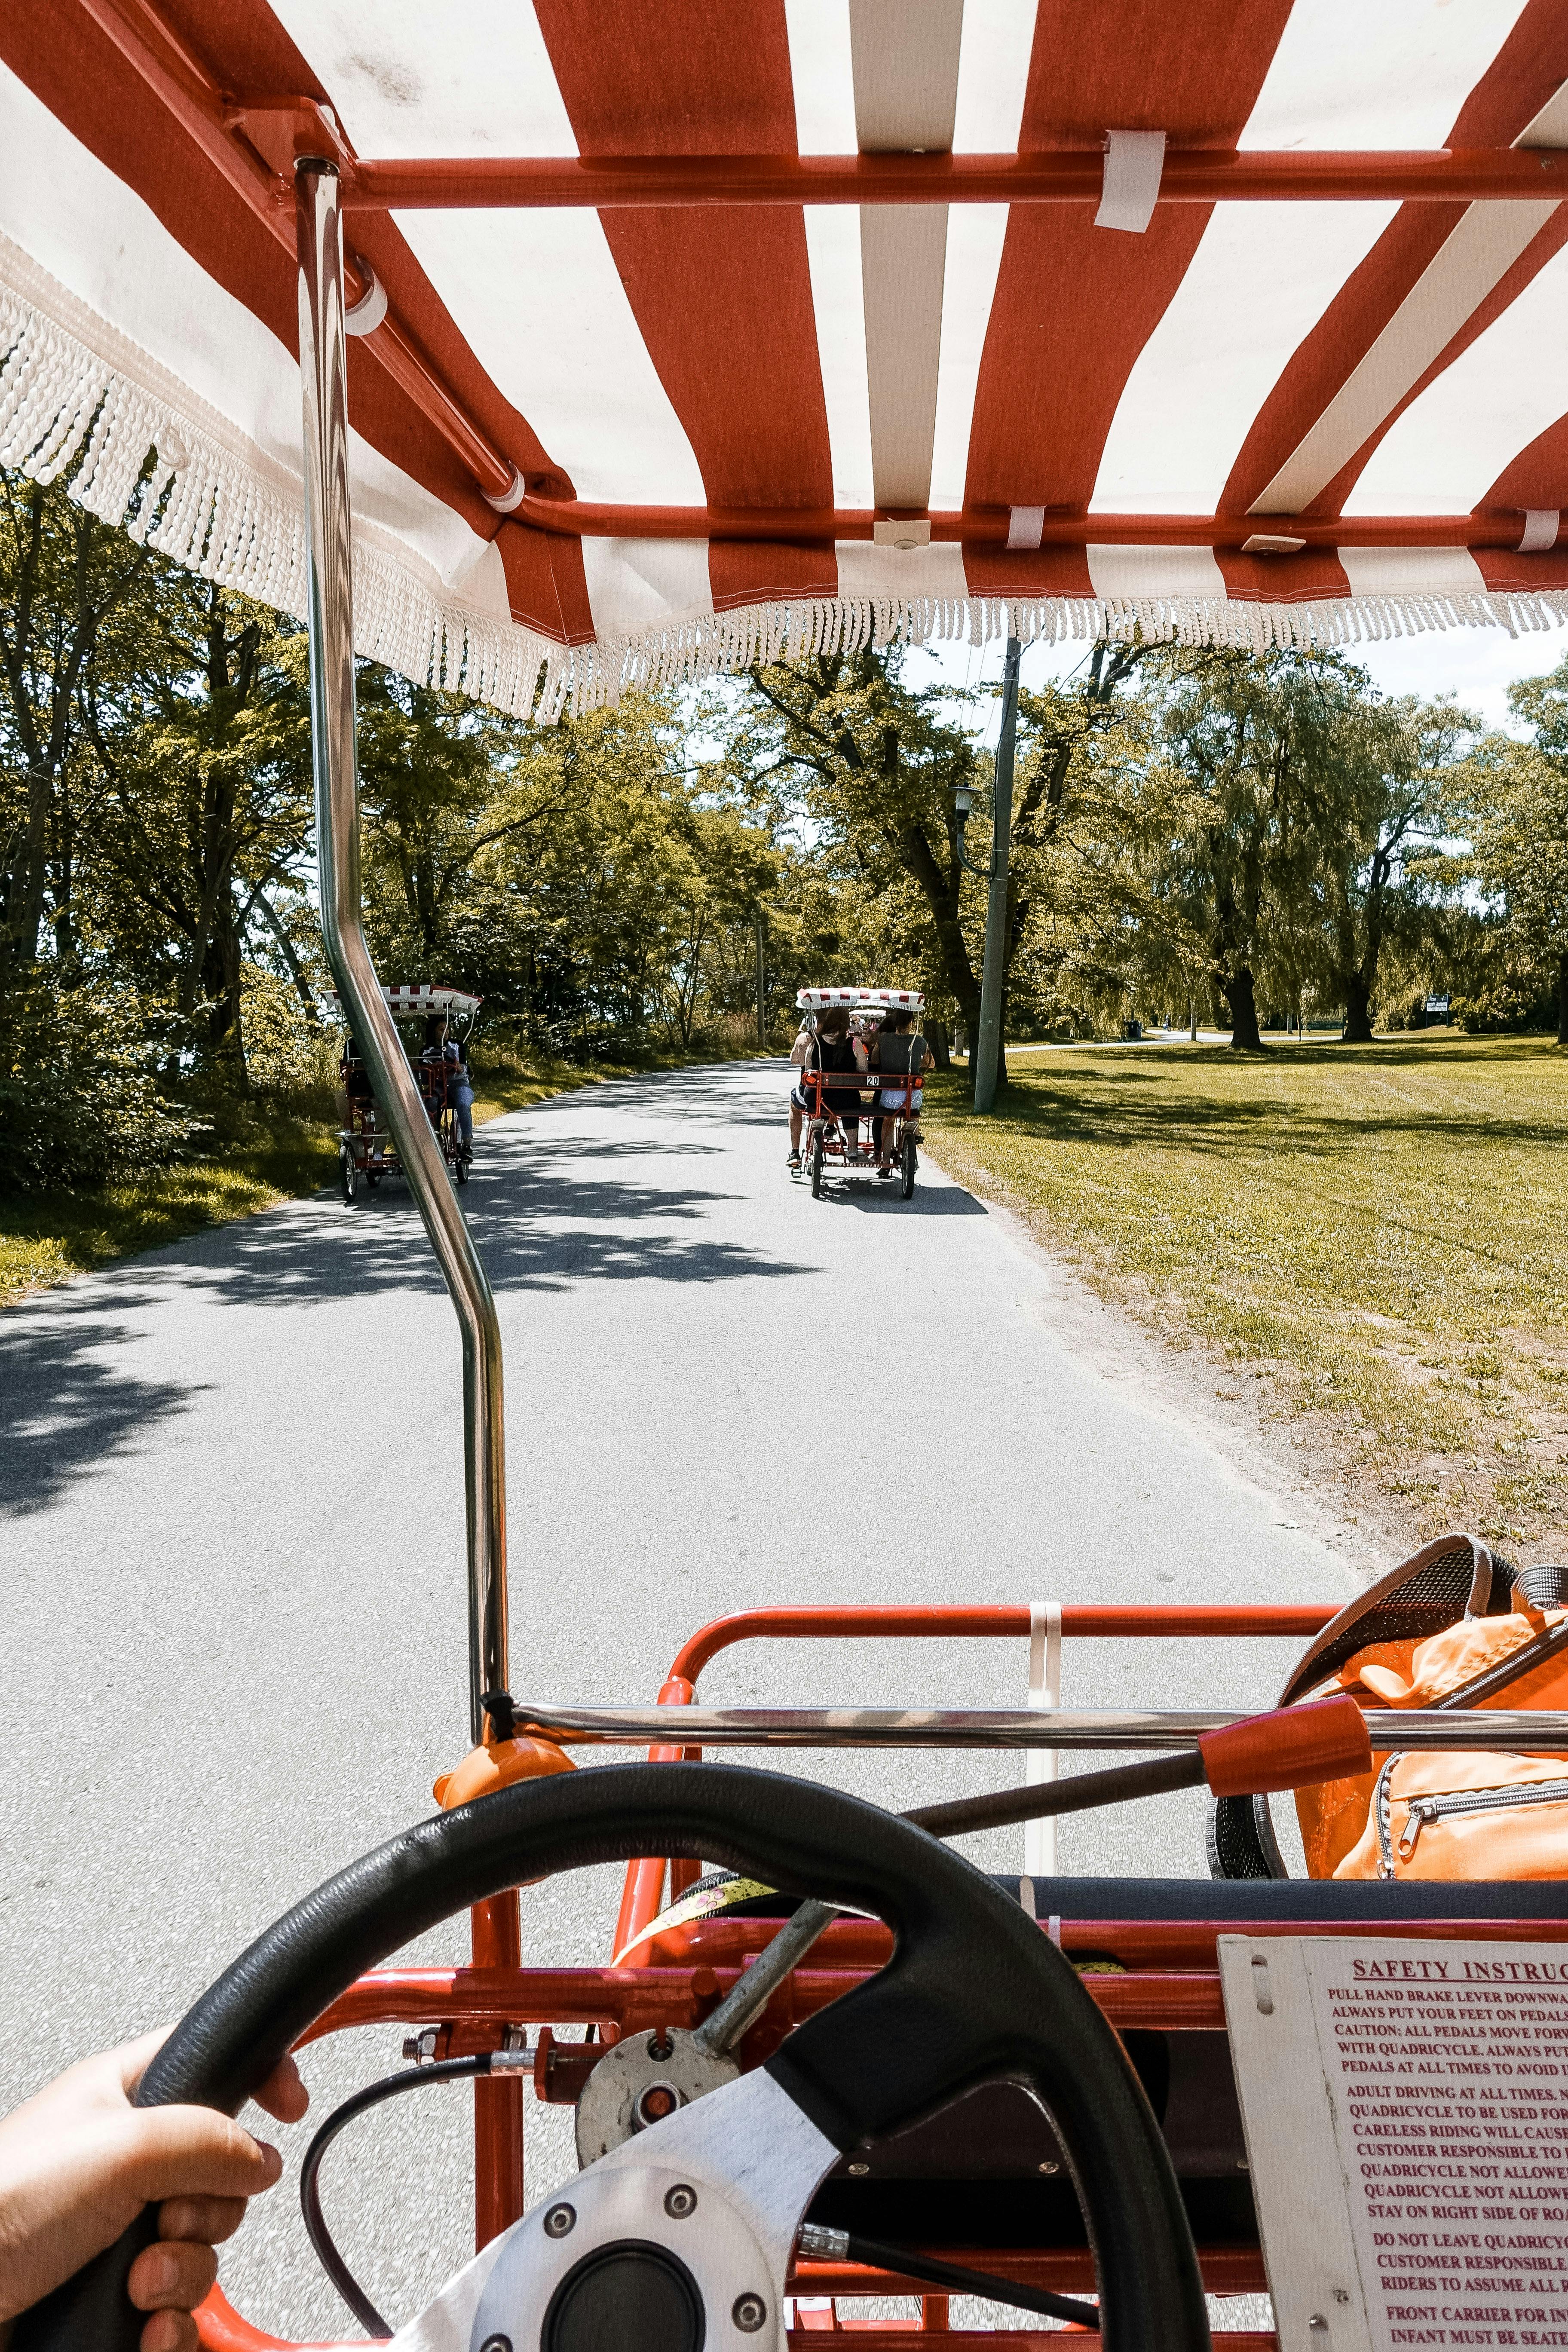 Who is orangutan driving golf cart?